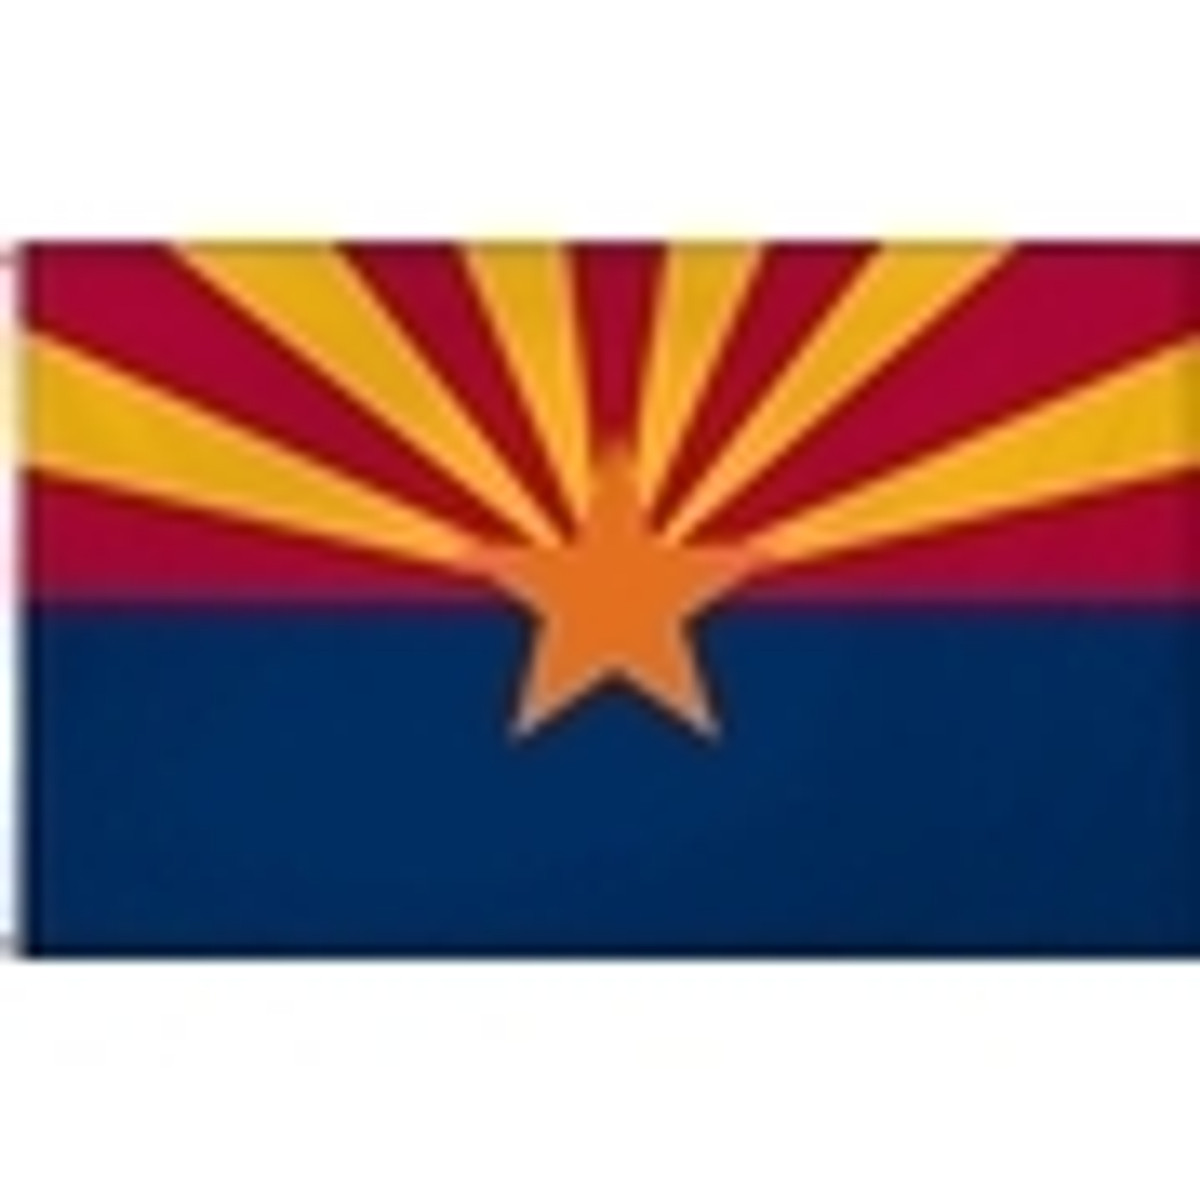 Arizona Flags